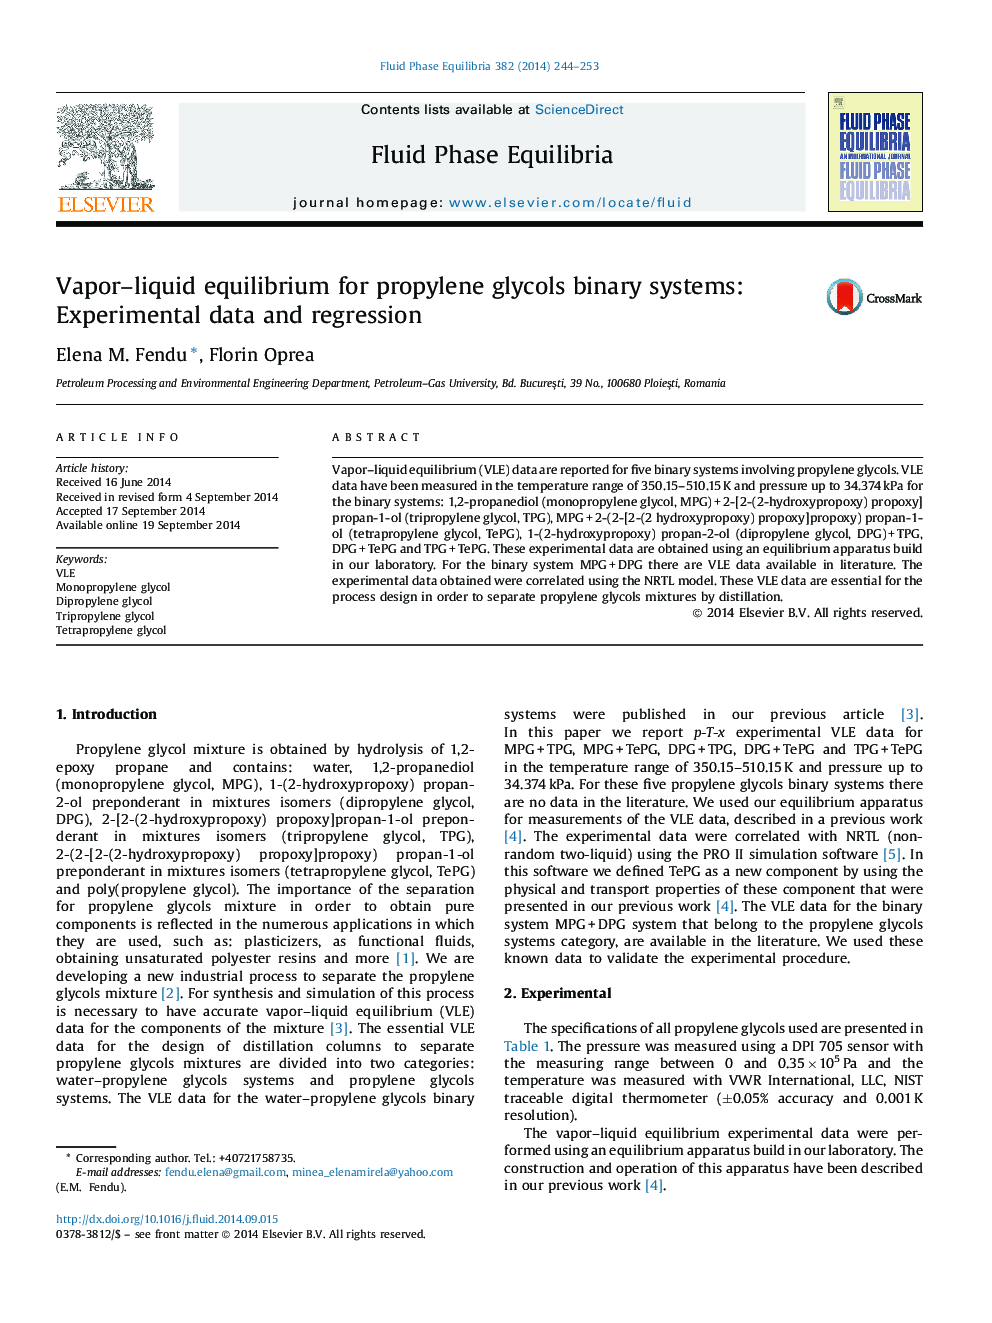 Vapor–liquid equilibrium for propylene glycols binary systems: Experimental data and regression